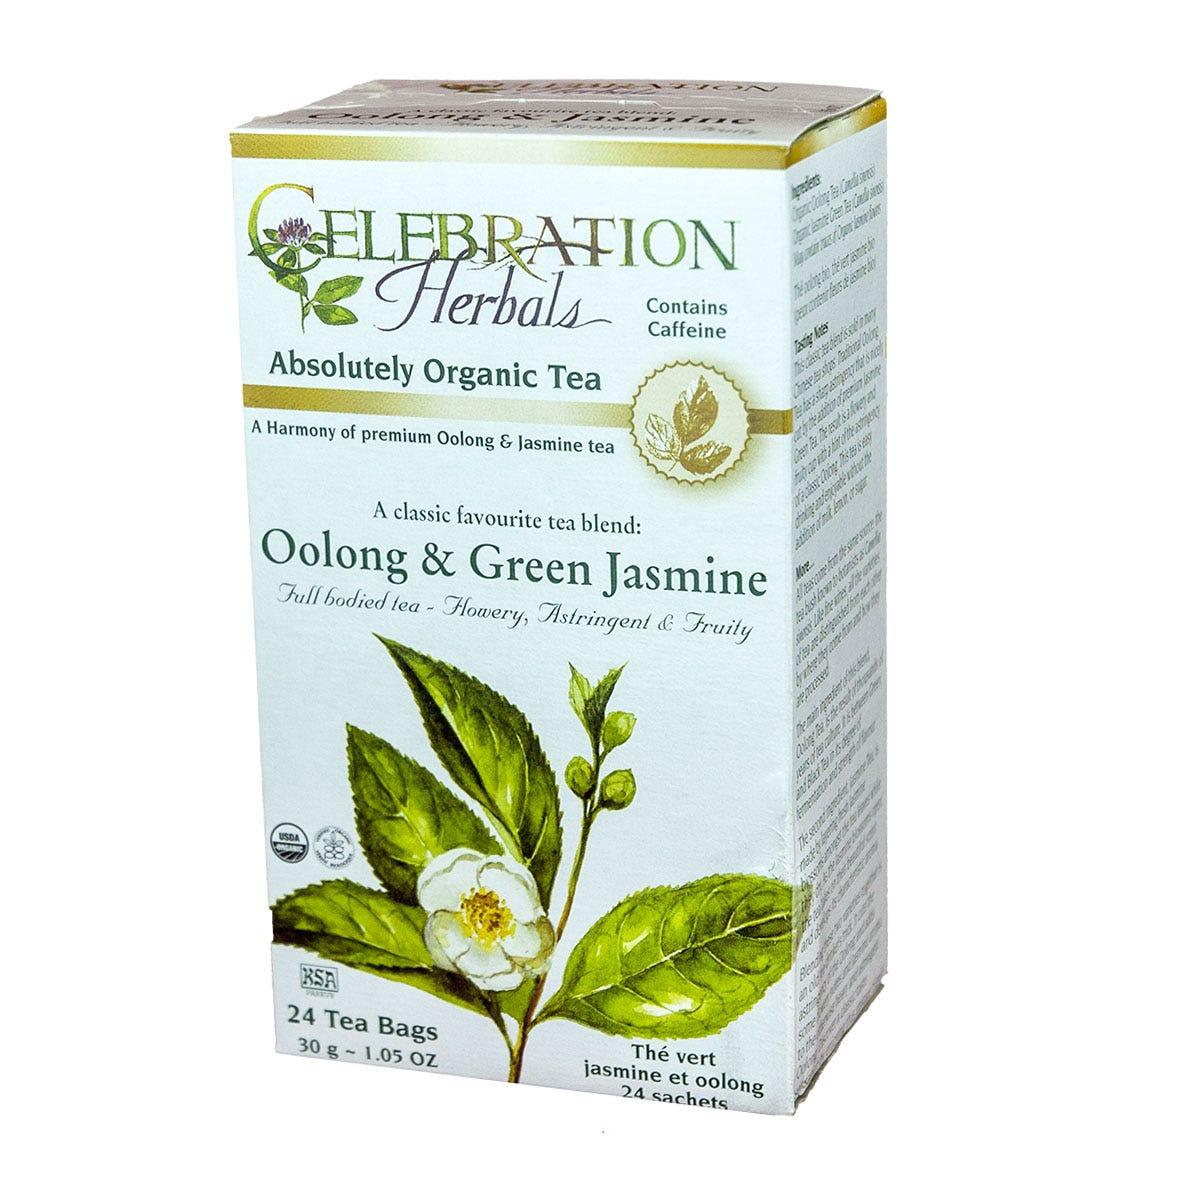 Celebration Herbals Organic Oolong Green Jasmine Tea 24 bags